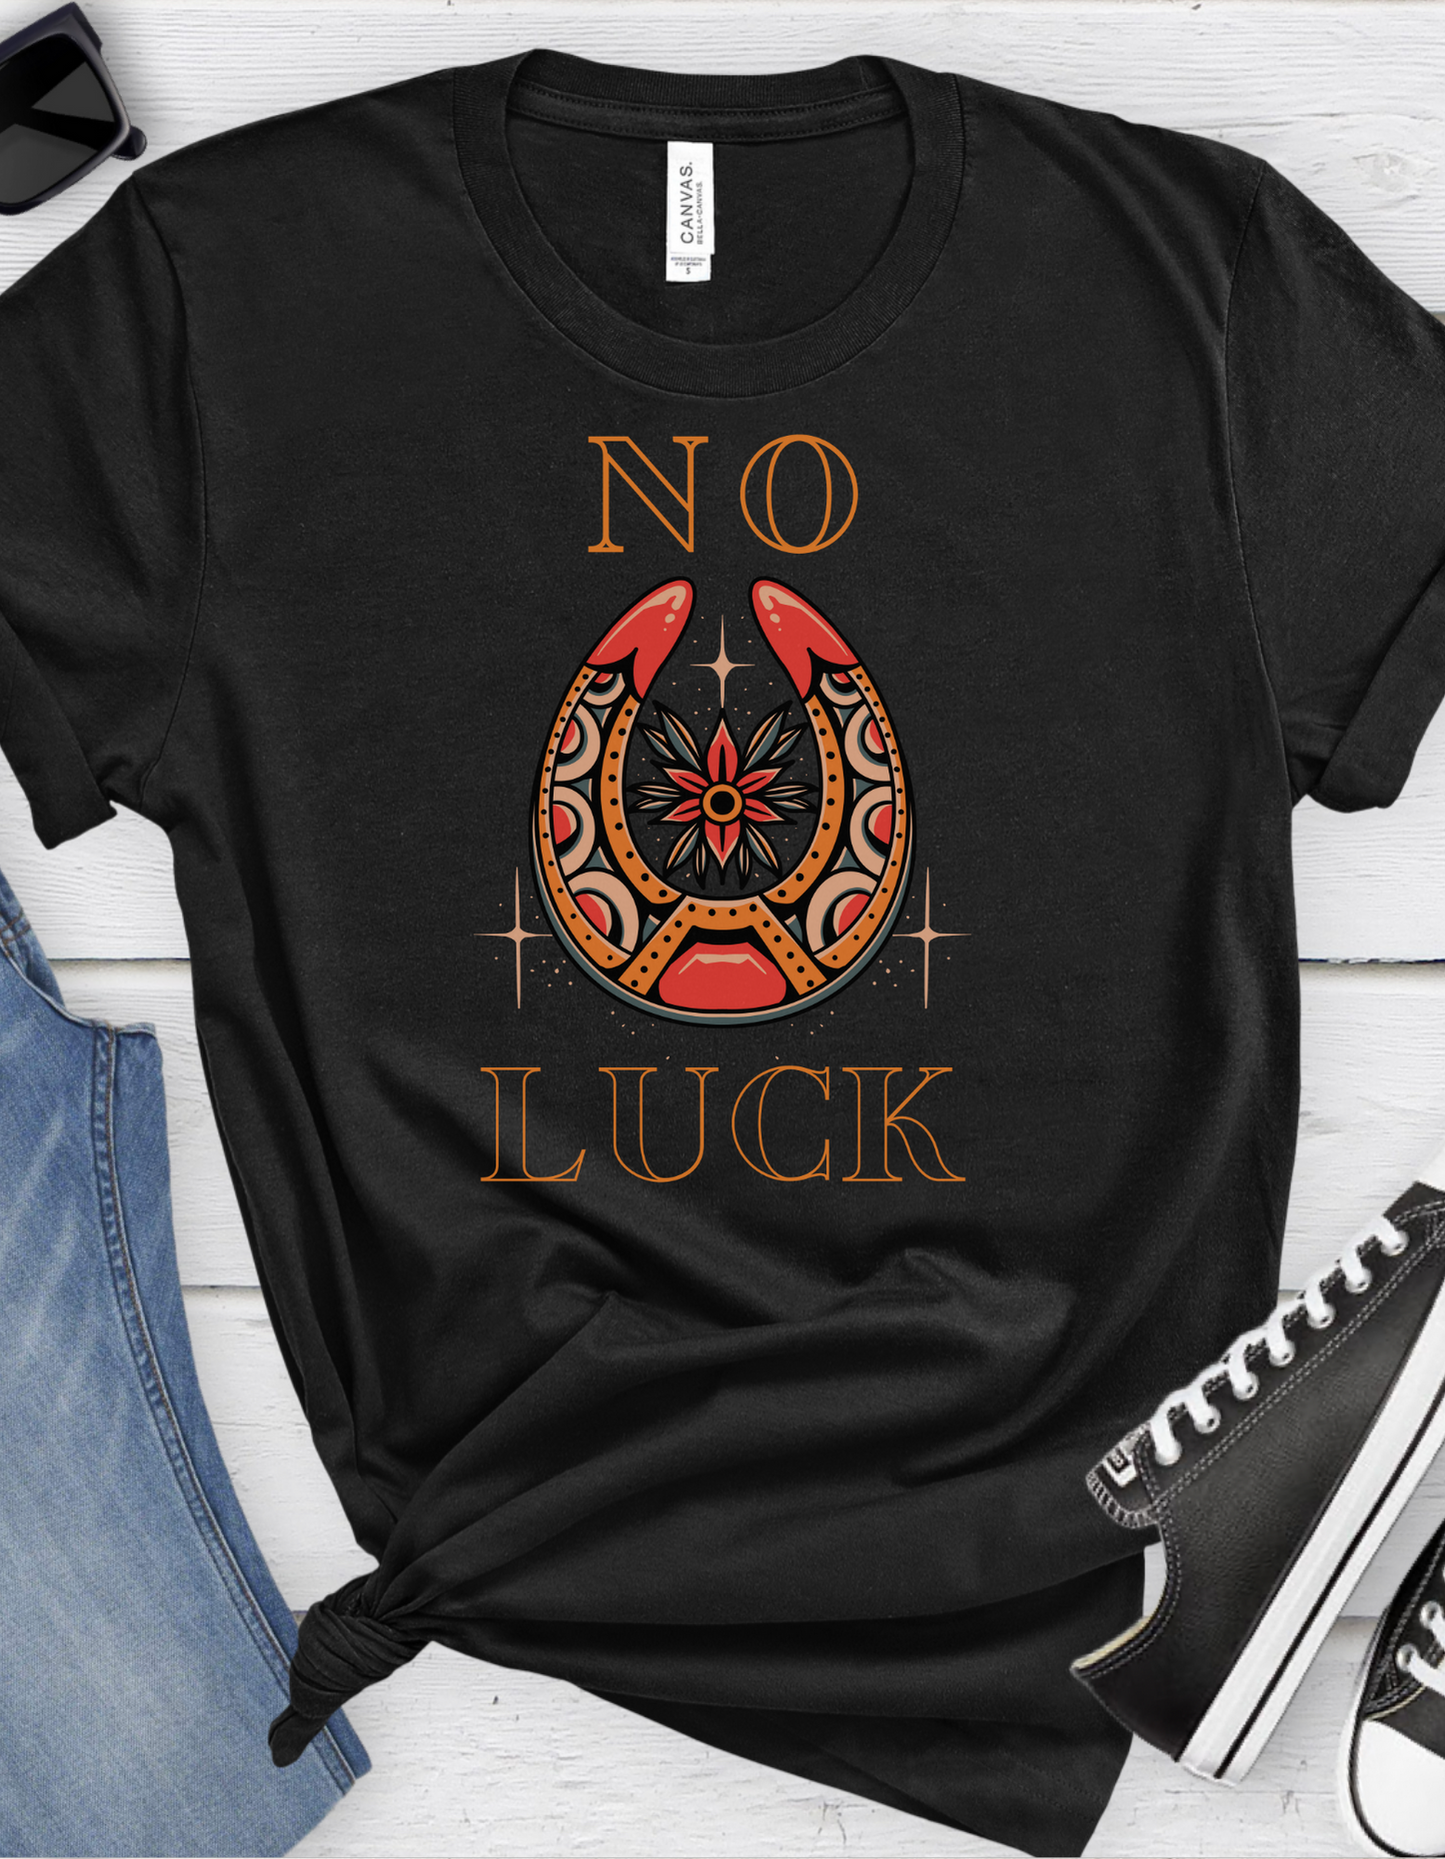 No Luck Tattoo T-shirt / Traditional Tattoo Tee Shirt / Punk Rock Clothing Tshirt Rockabilly Psychobilly Freak Goth - Foxlark Crystal Jewelry